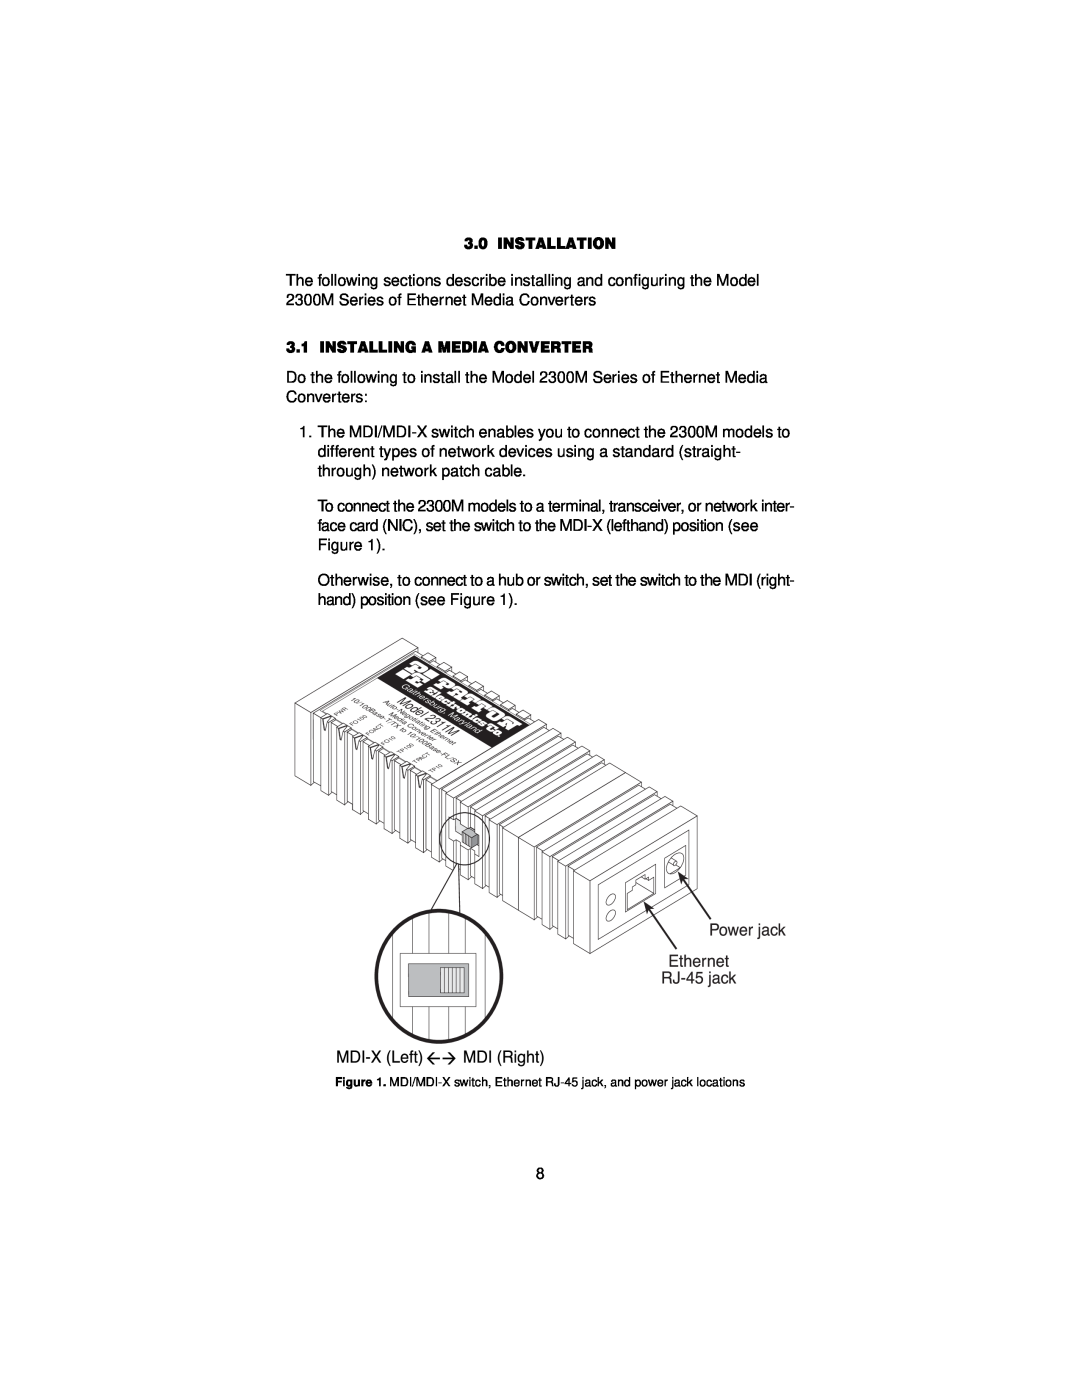 Patton electronic 2300M user manual Installation, Installing A Media Converter, Model 